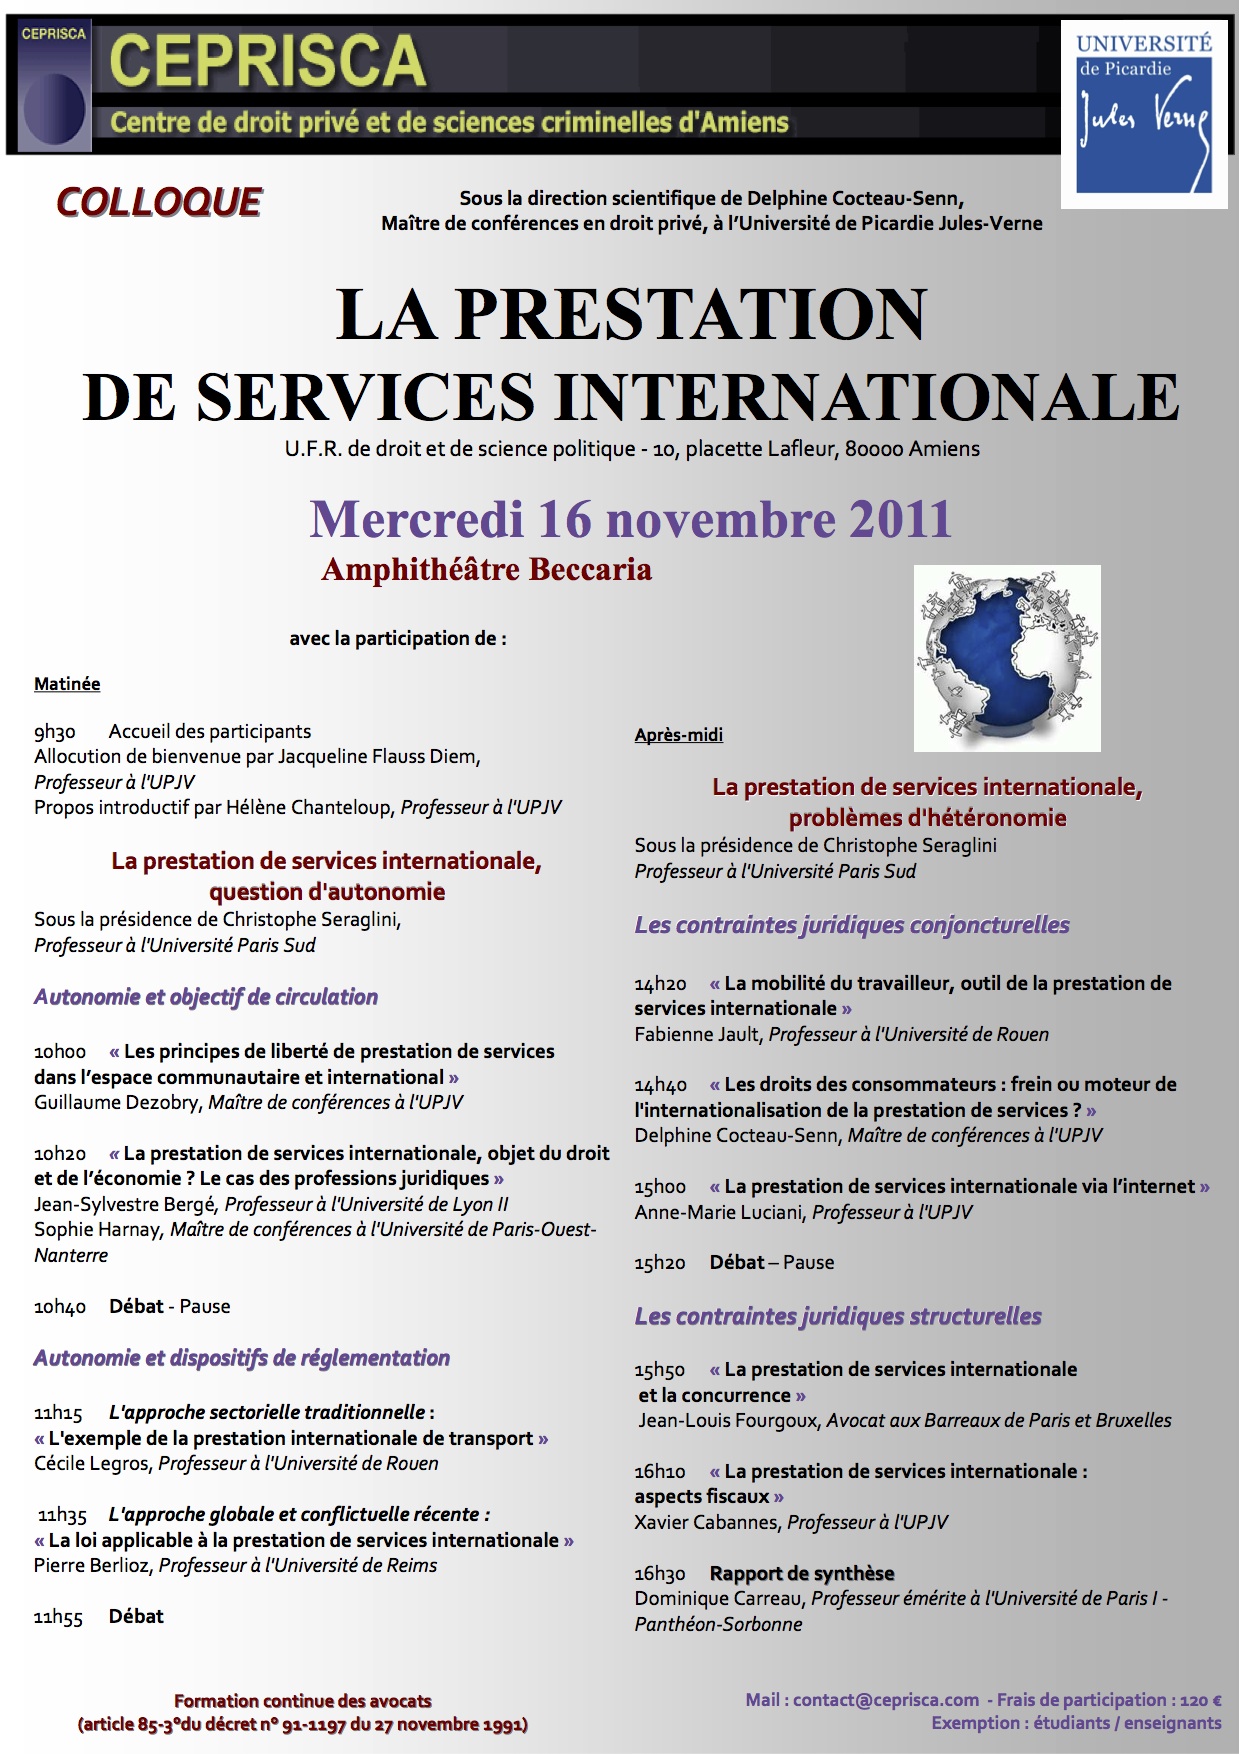 CEPRISCA-_La_Prestation_de_Services_internationale-16_novembre_2011